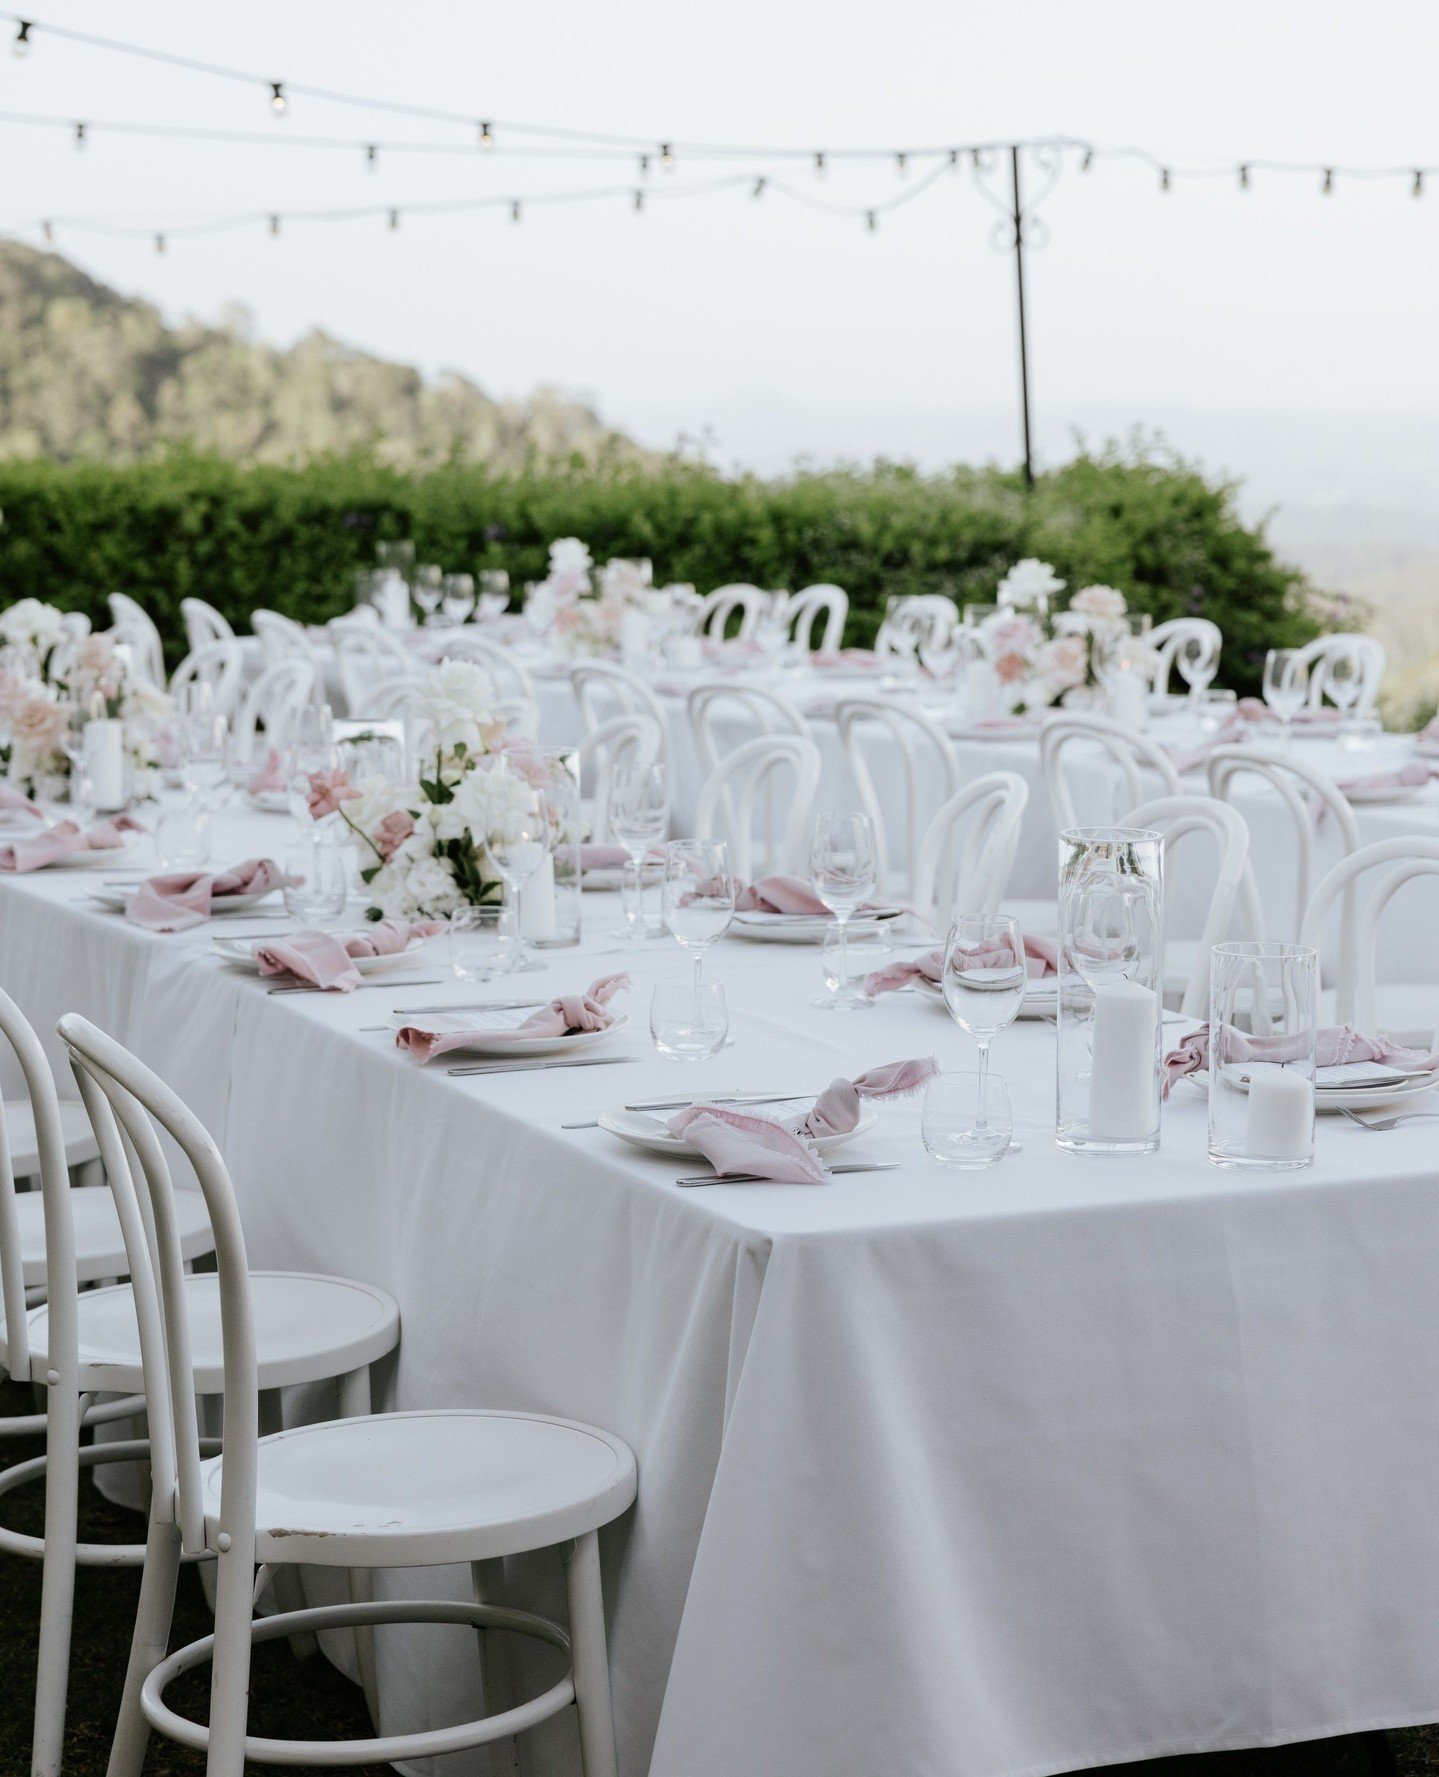 Reception dining vibes on the upper lawn...⁠
⁠
Venue: @malenymanor⁠
Photographer: @plusoneweddings⁠
Florist: @mondofloraldesigns⁠
Stylist: @lovebirdweddings ⁠
⁠
⁠
⁠
⁠
⁠
⁠
⁠
⁠
#originalwedding #beautifulwedding #elegantwedding #weddinginspiration #wed